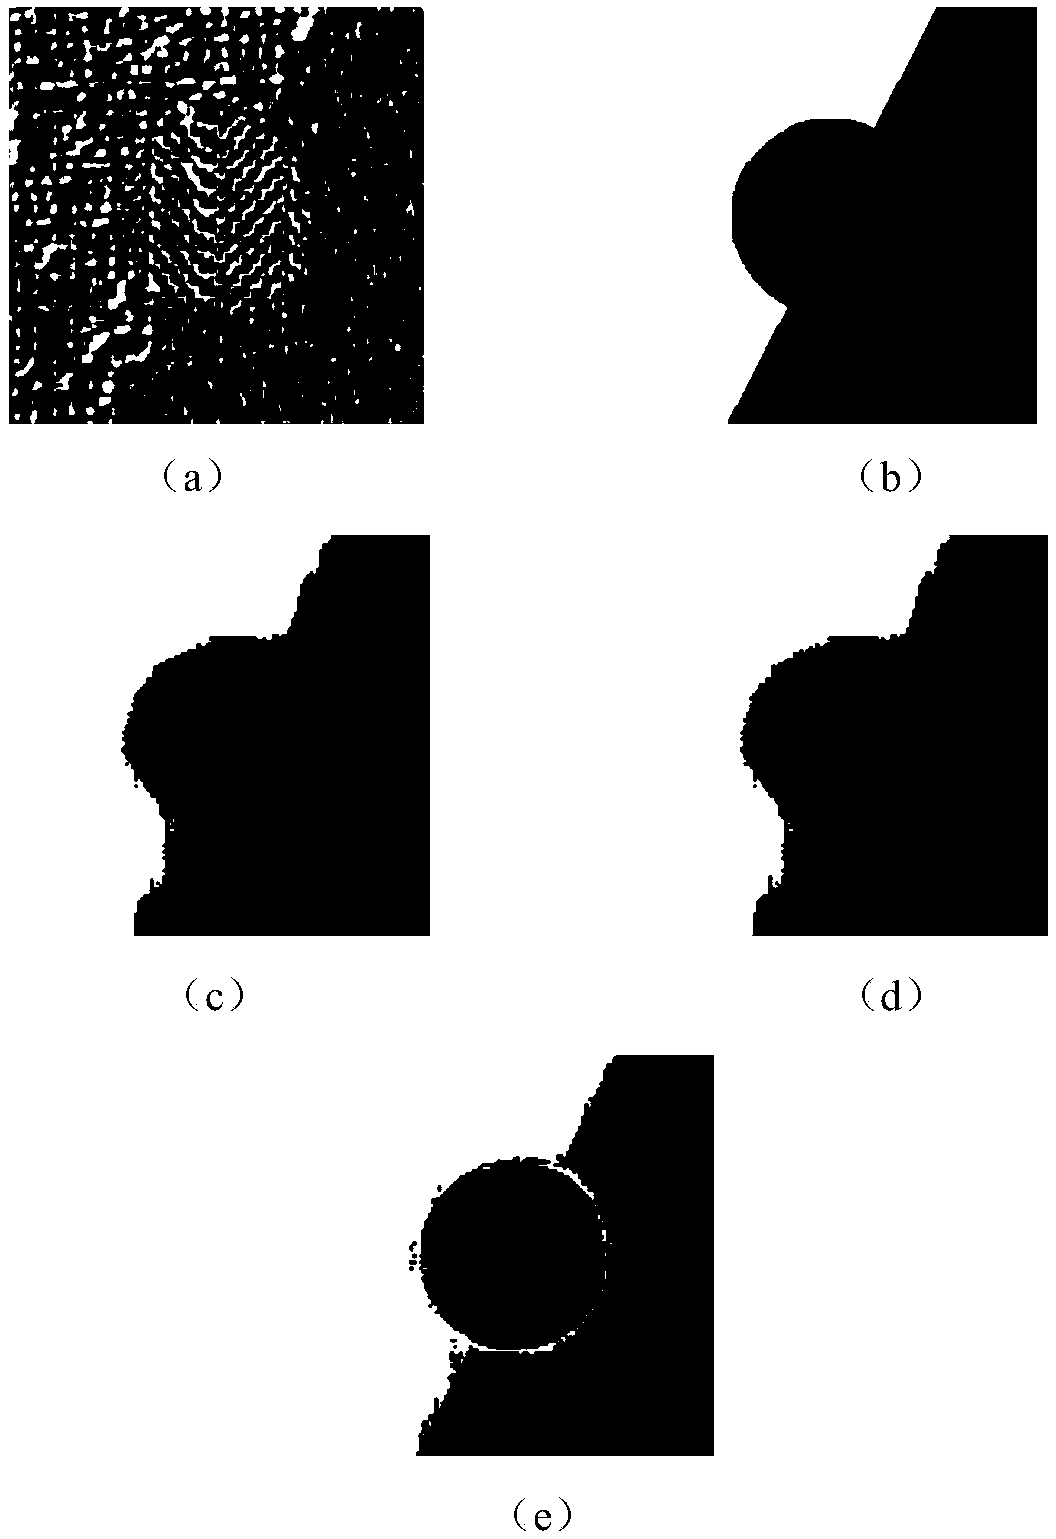 Image segmentation method of semi-supervised kernel k-mean clustering based on constraint pairs